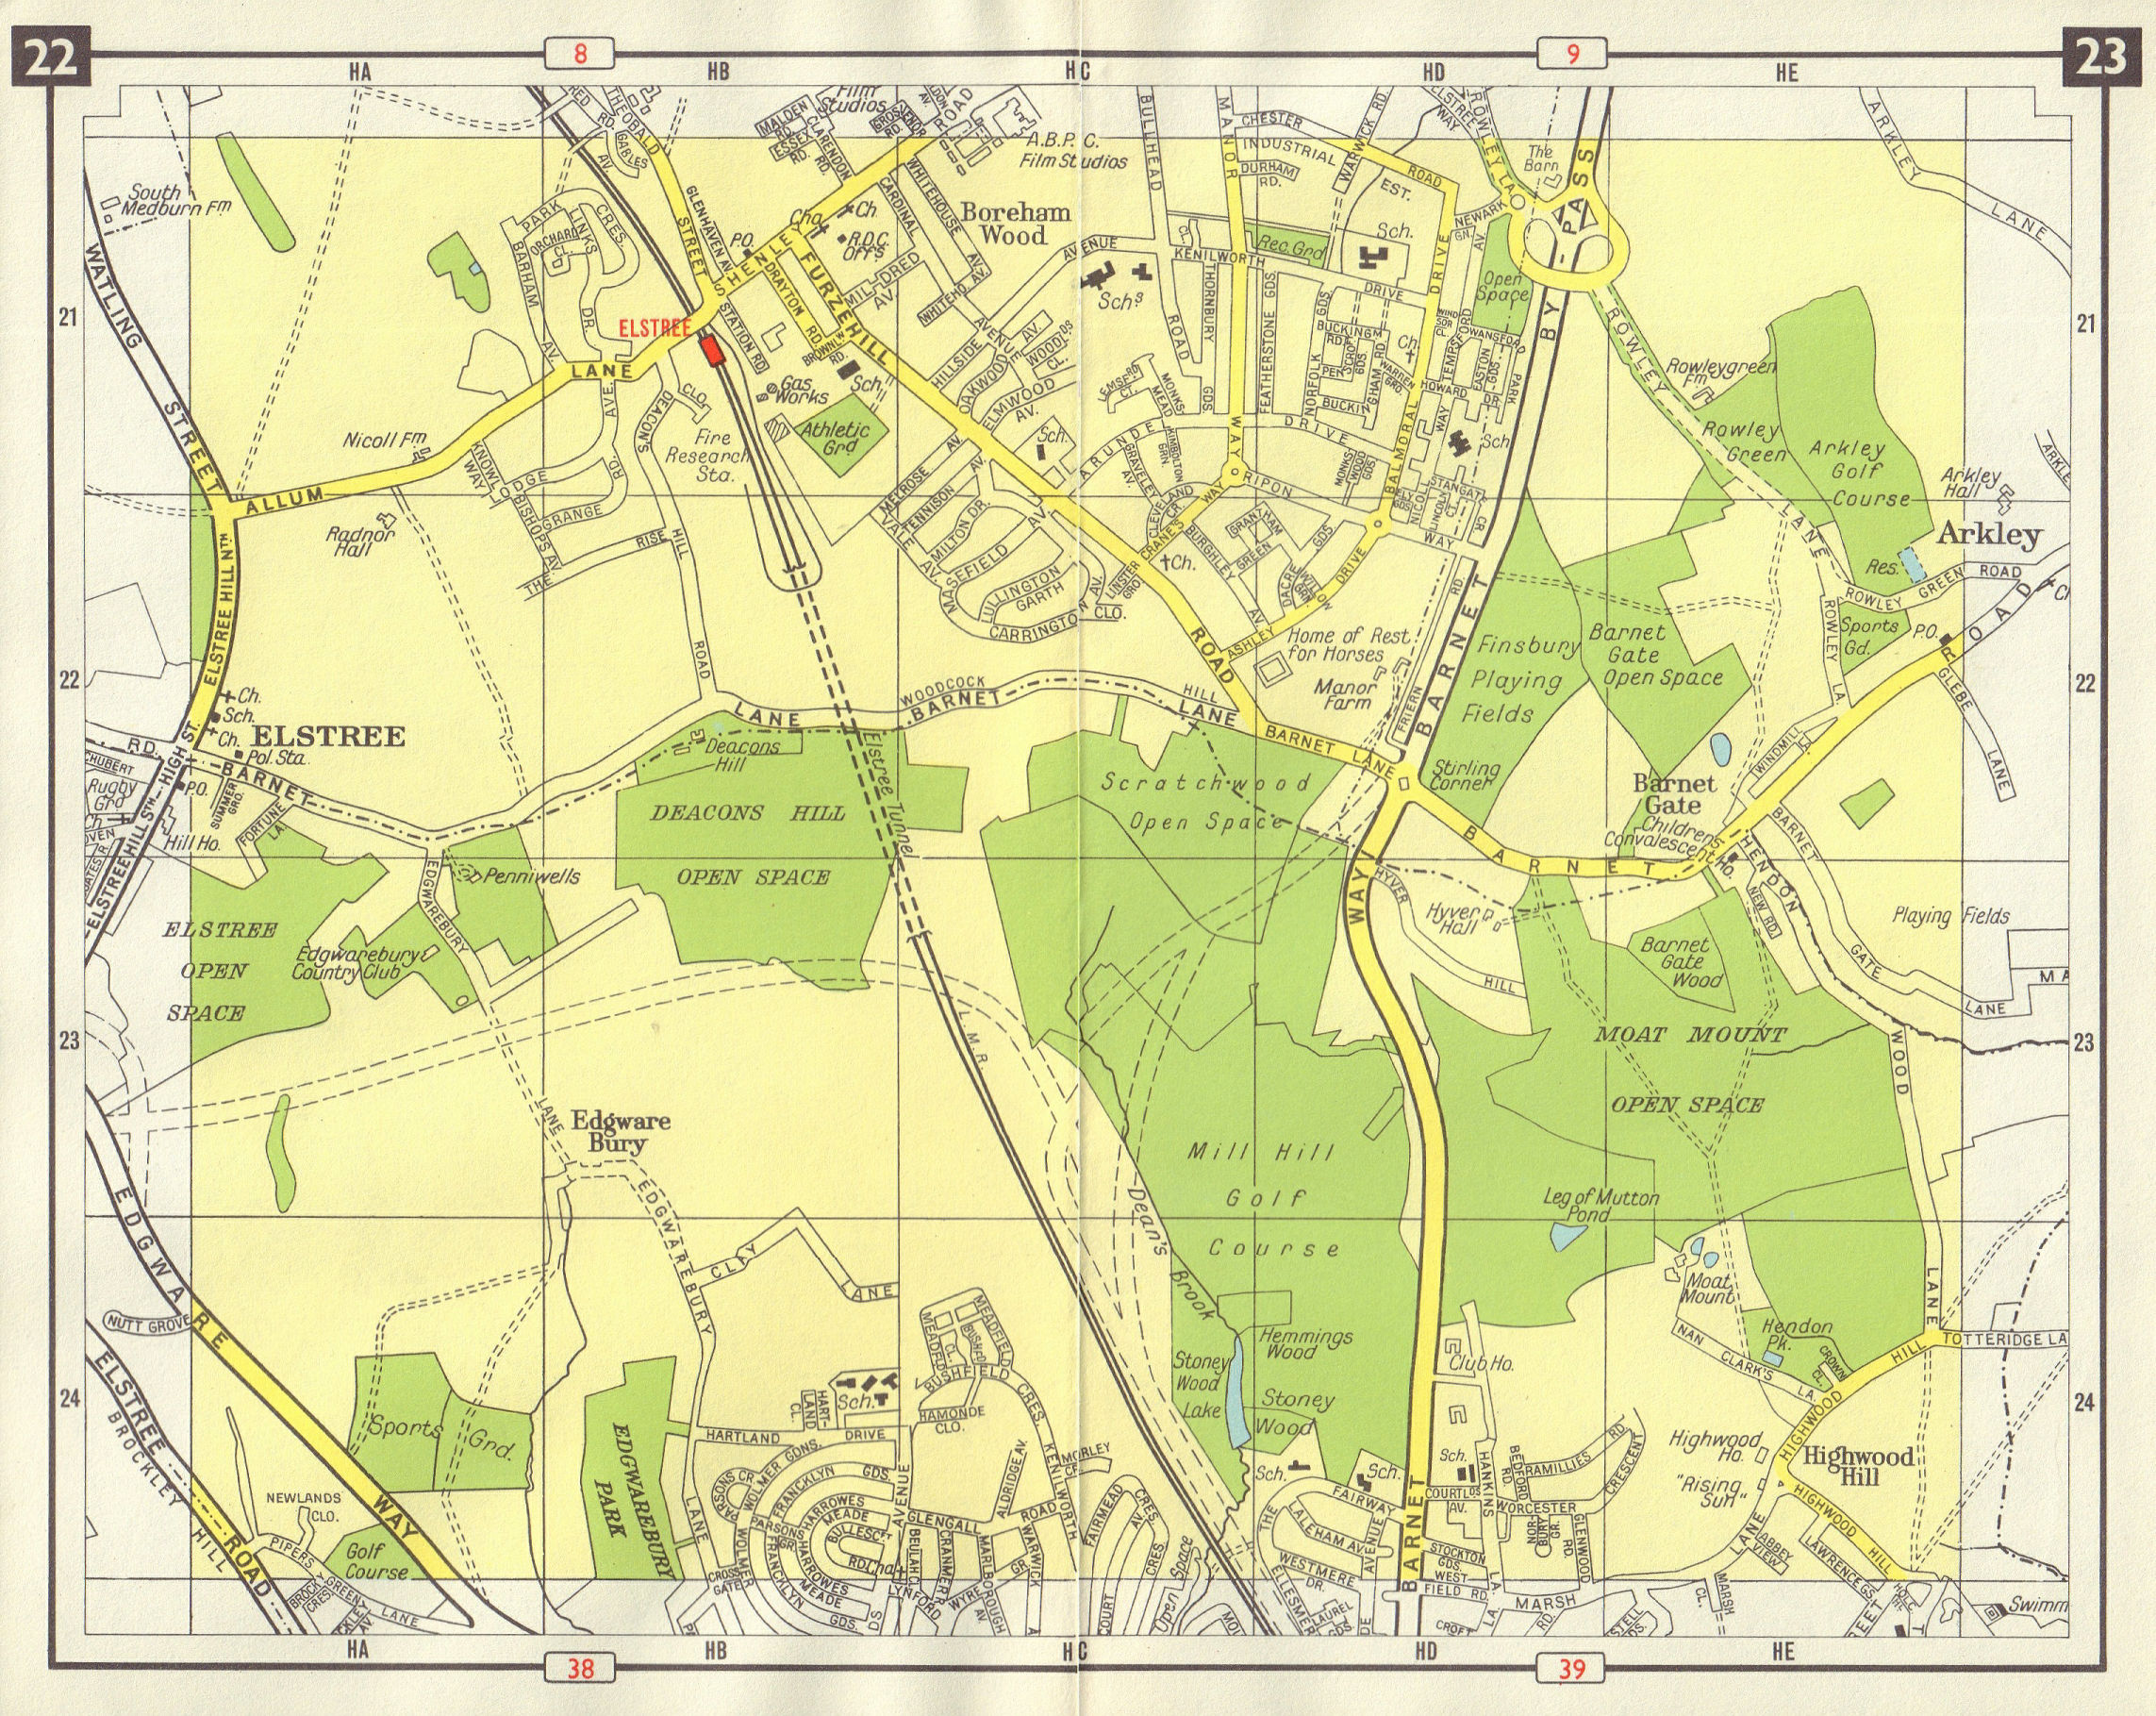 NW LONDON Elstree Borehamwood Barnet Gate Highwood Hill M1 projected 1965 map